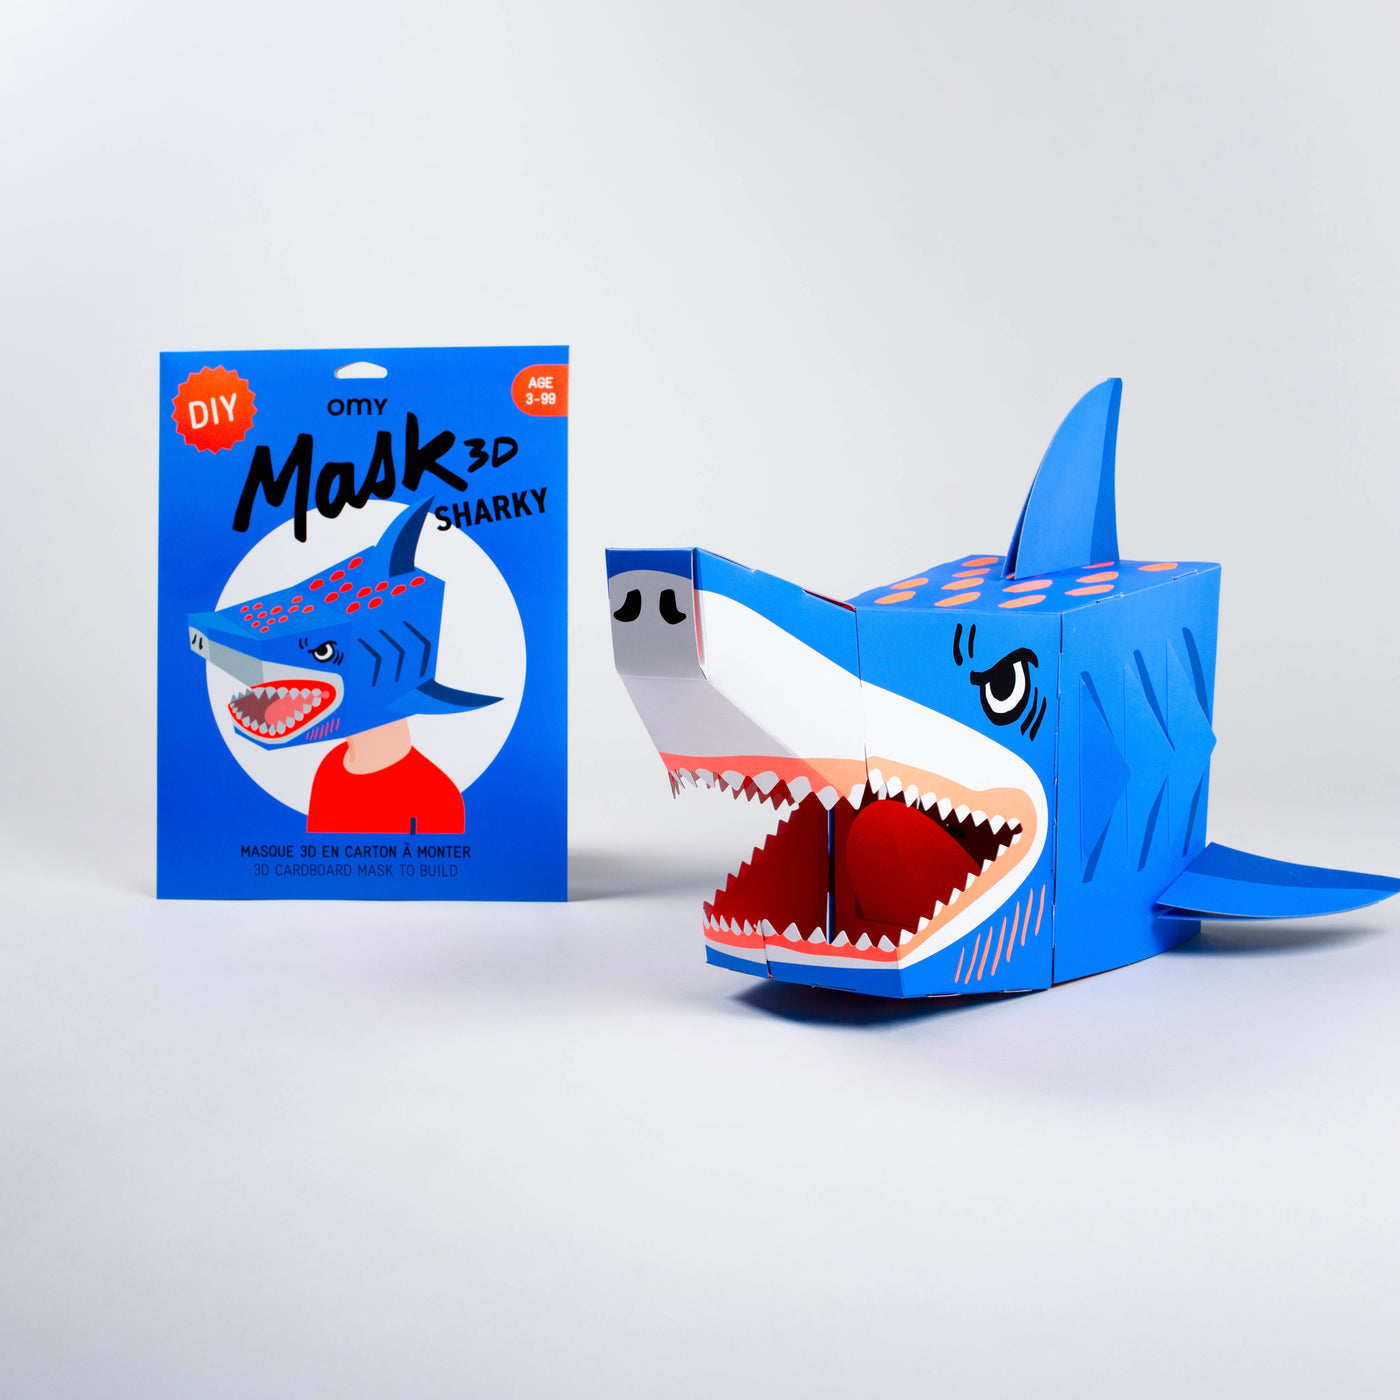 Sharky 3D mask